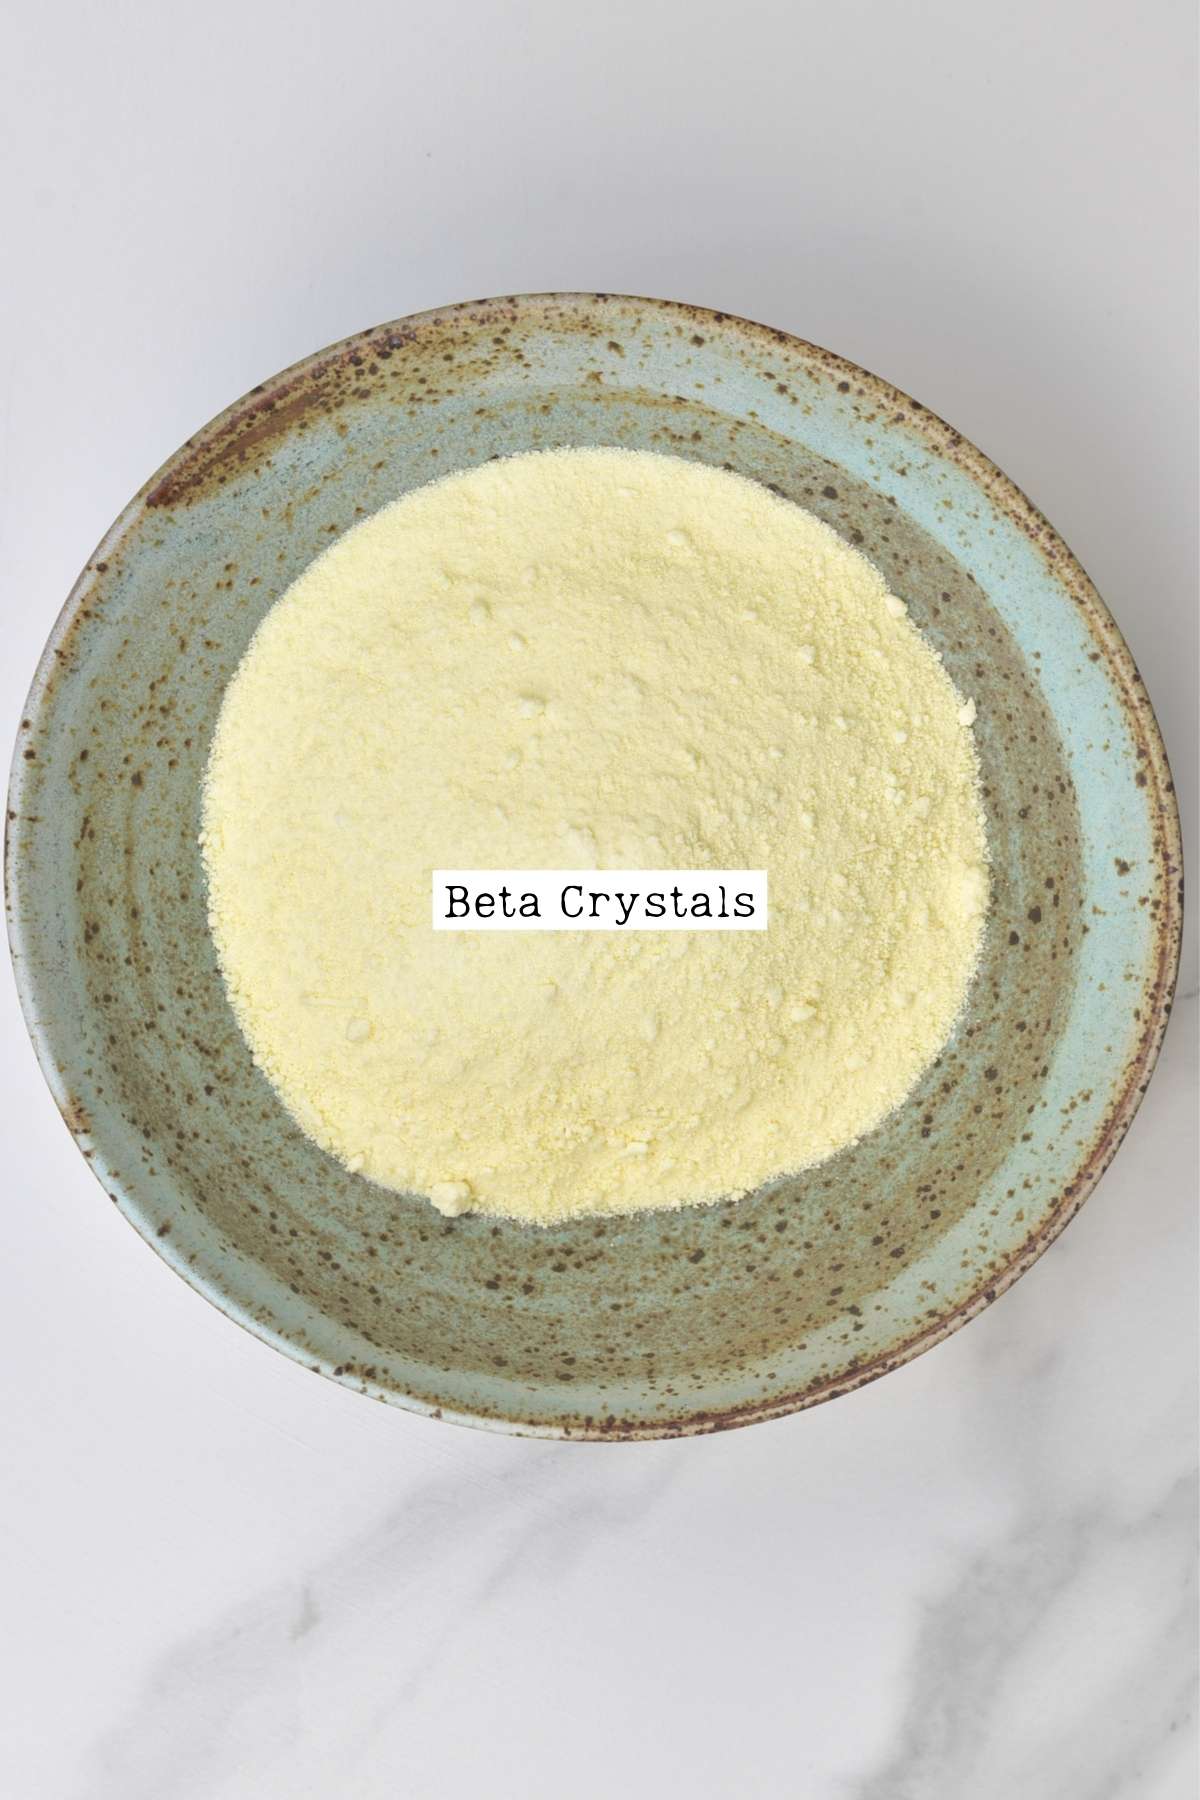 Beta Crystals